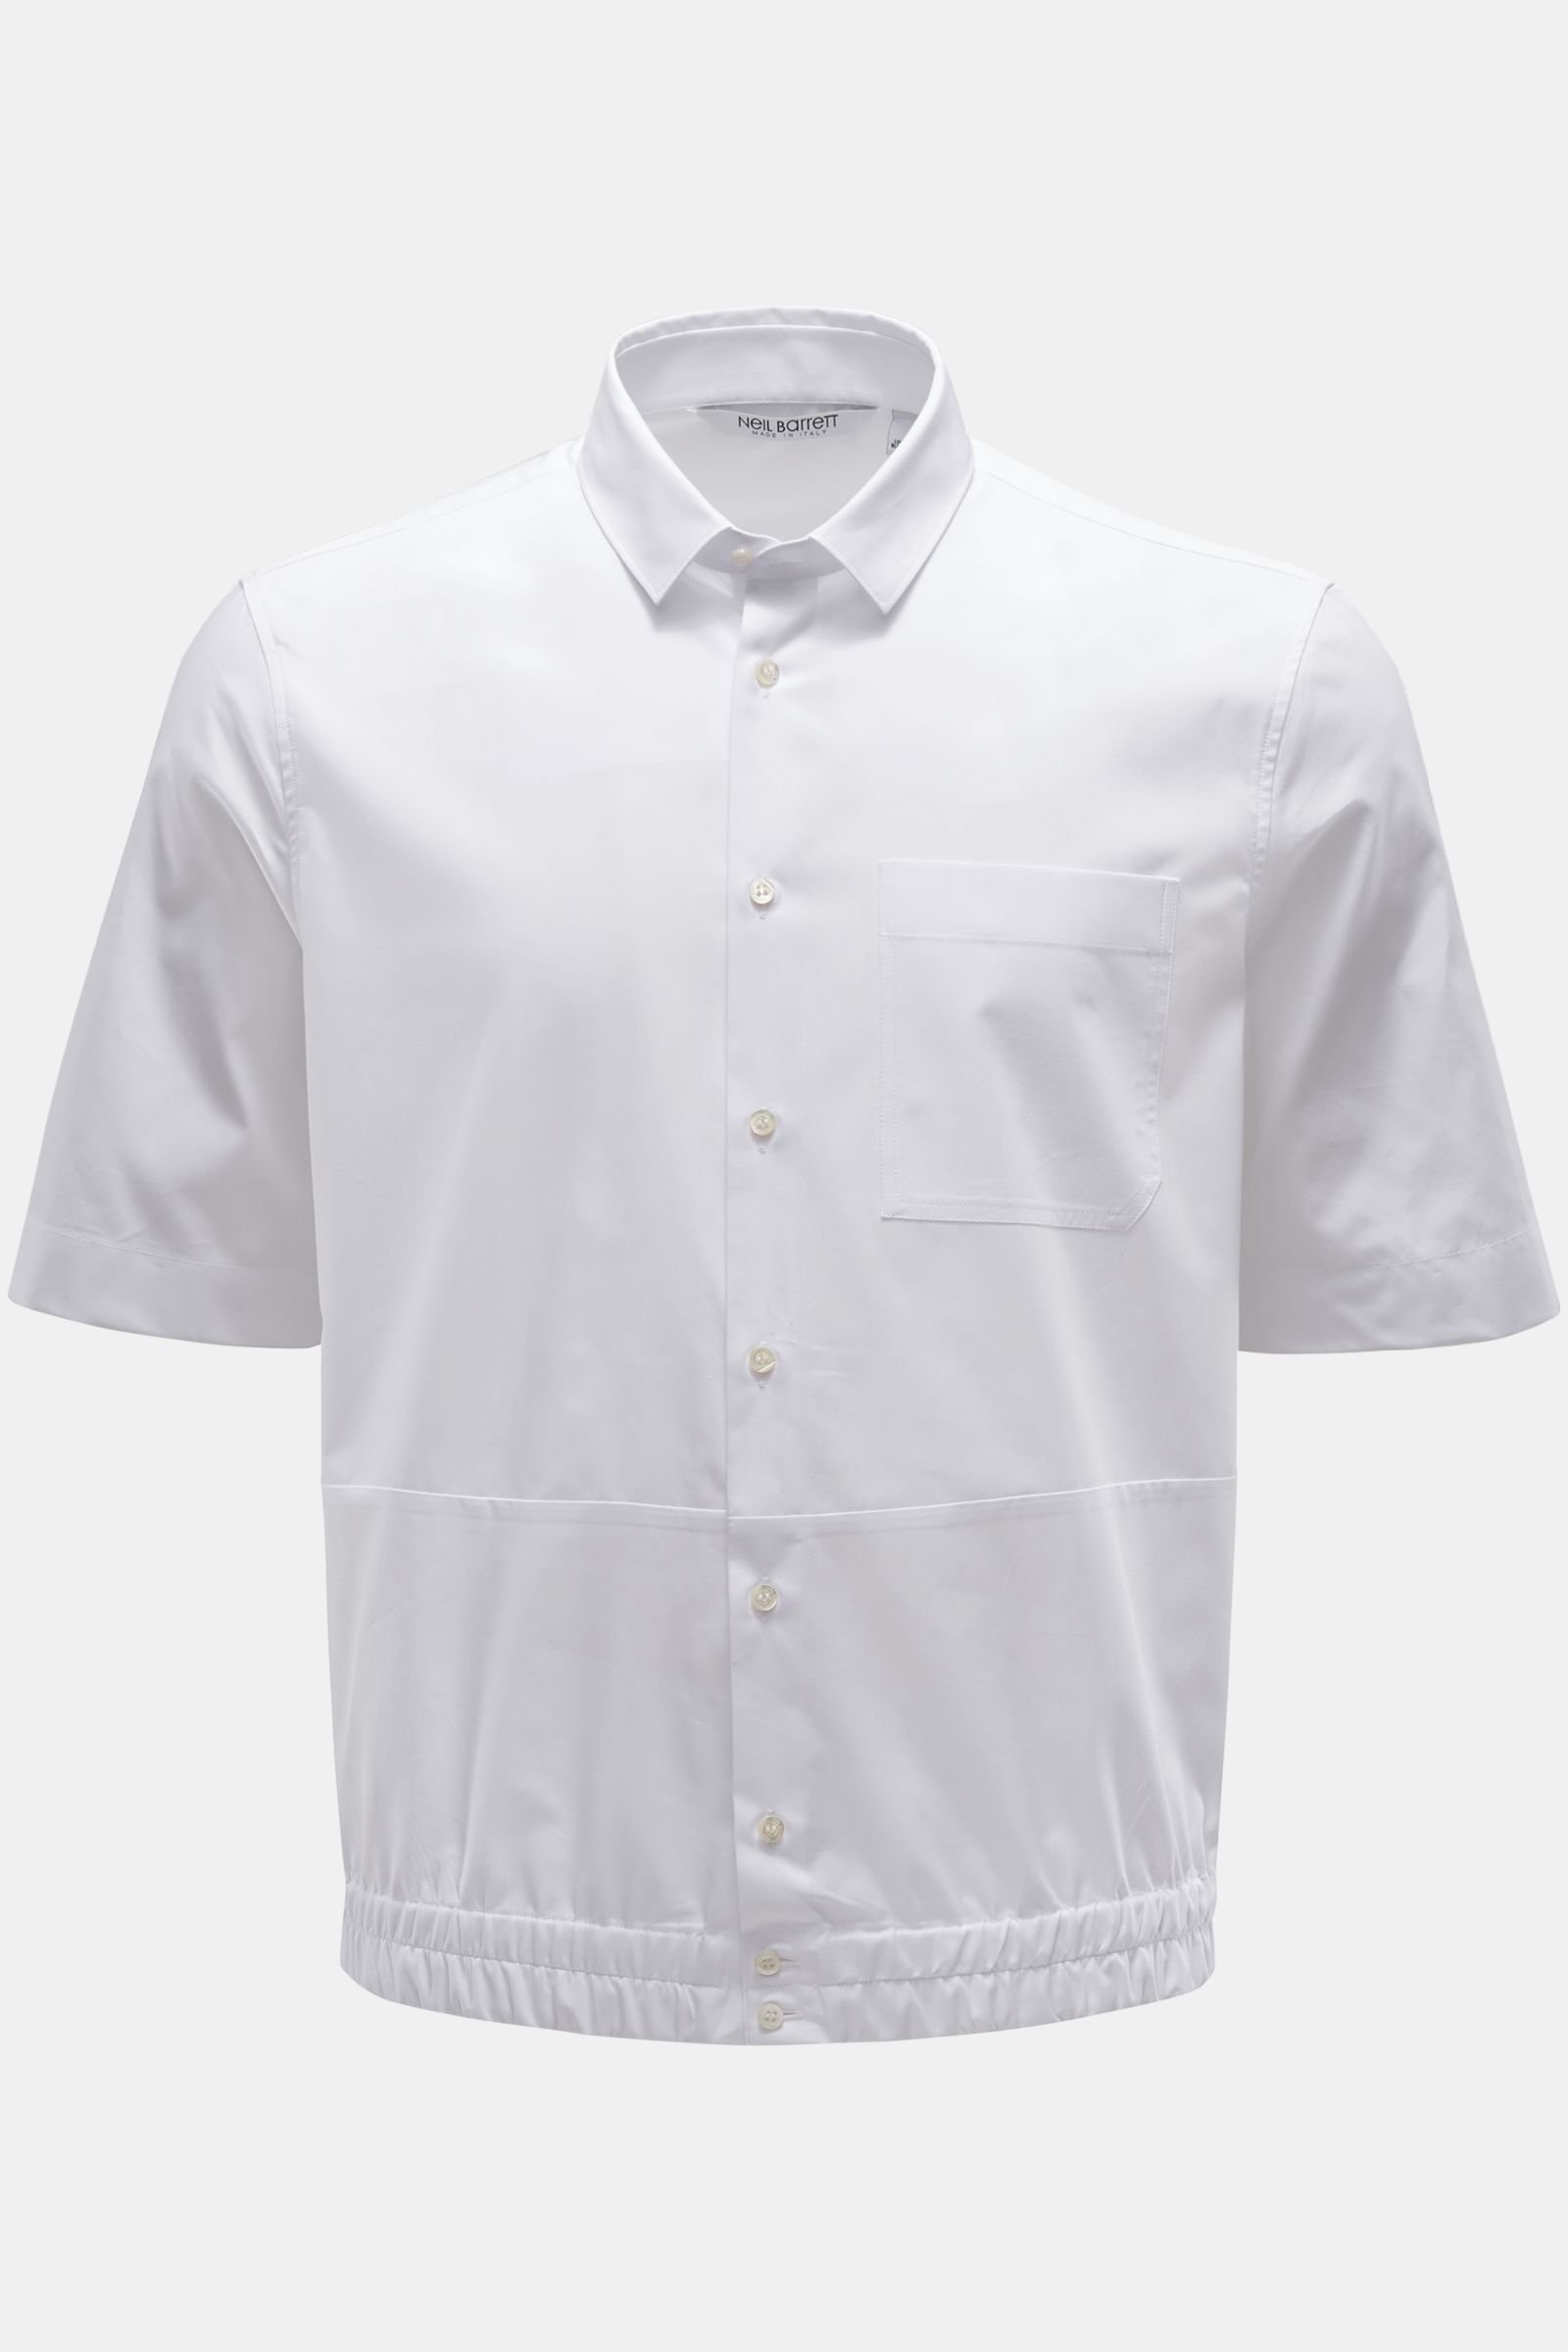 Short-sleeve shirt slim collar white